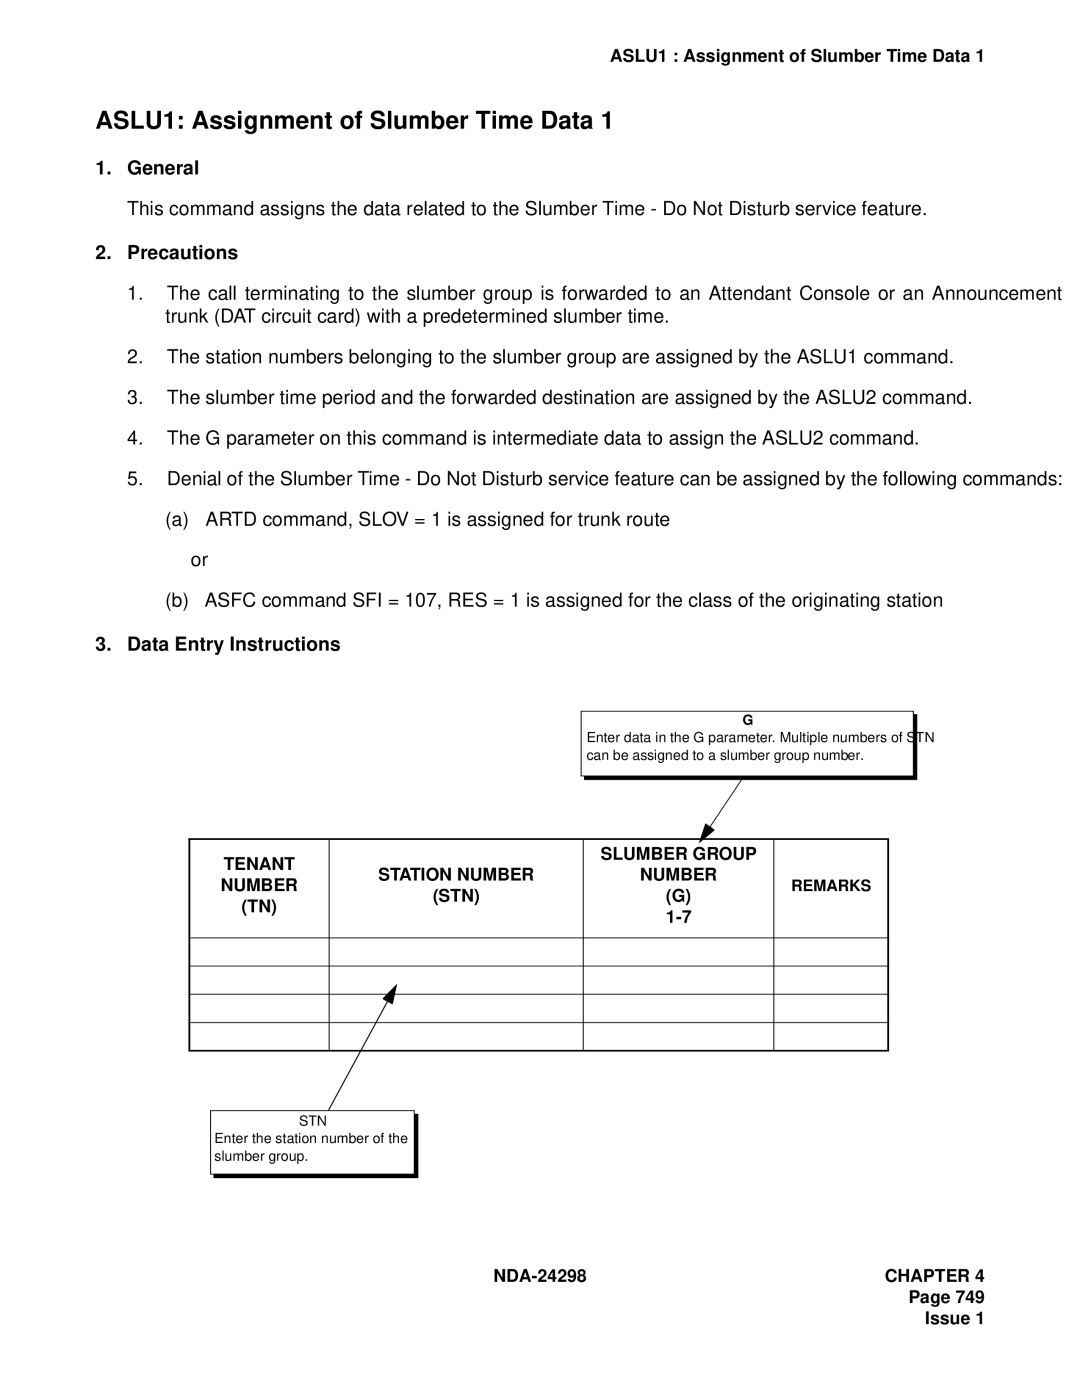 NEC NDA-24298 manual ASLU1 Assignment of Slumber Time Data, Tenant Number TN Station Number STN Slumber Group 